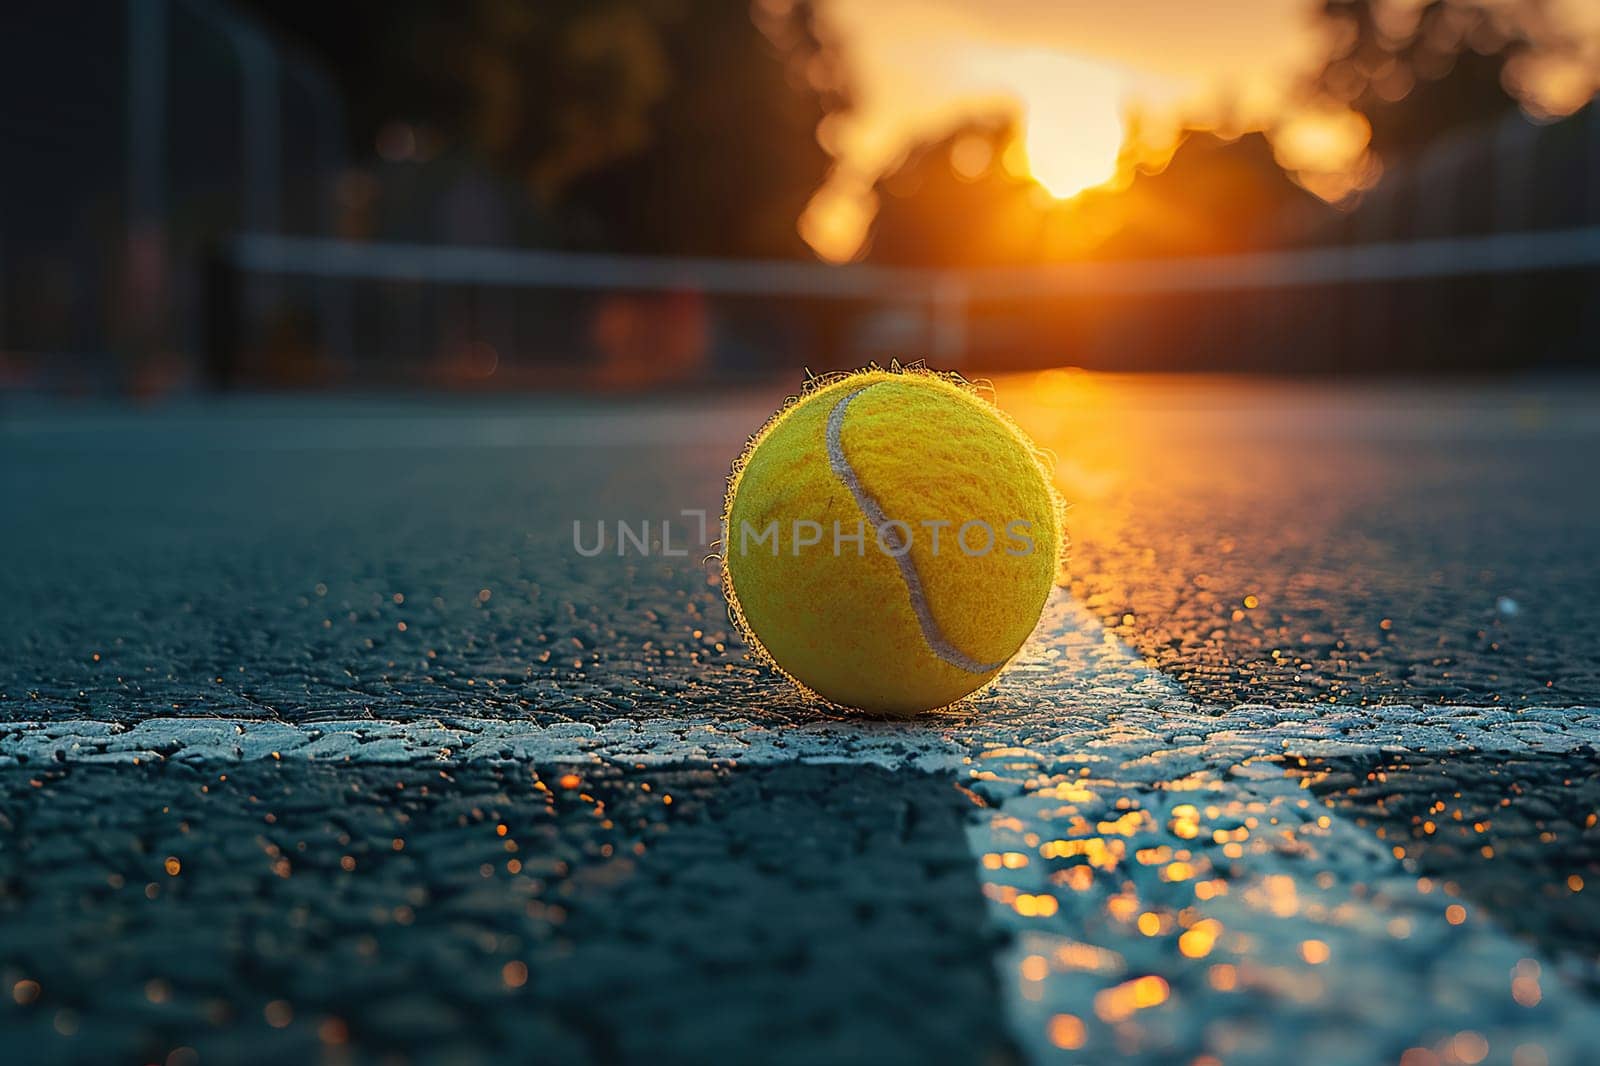 Close-up of a tennis ball on a tennis court at sunset.